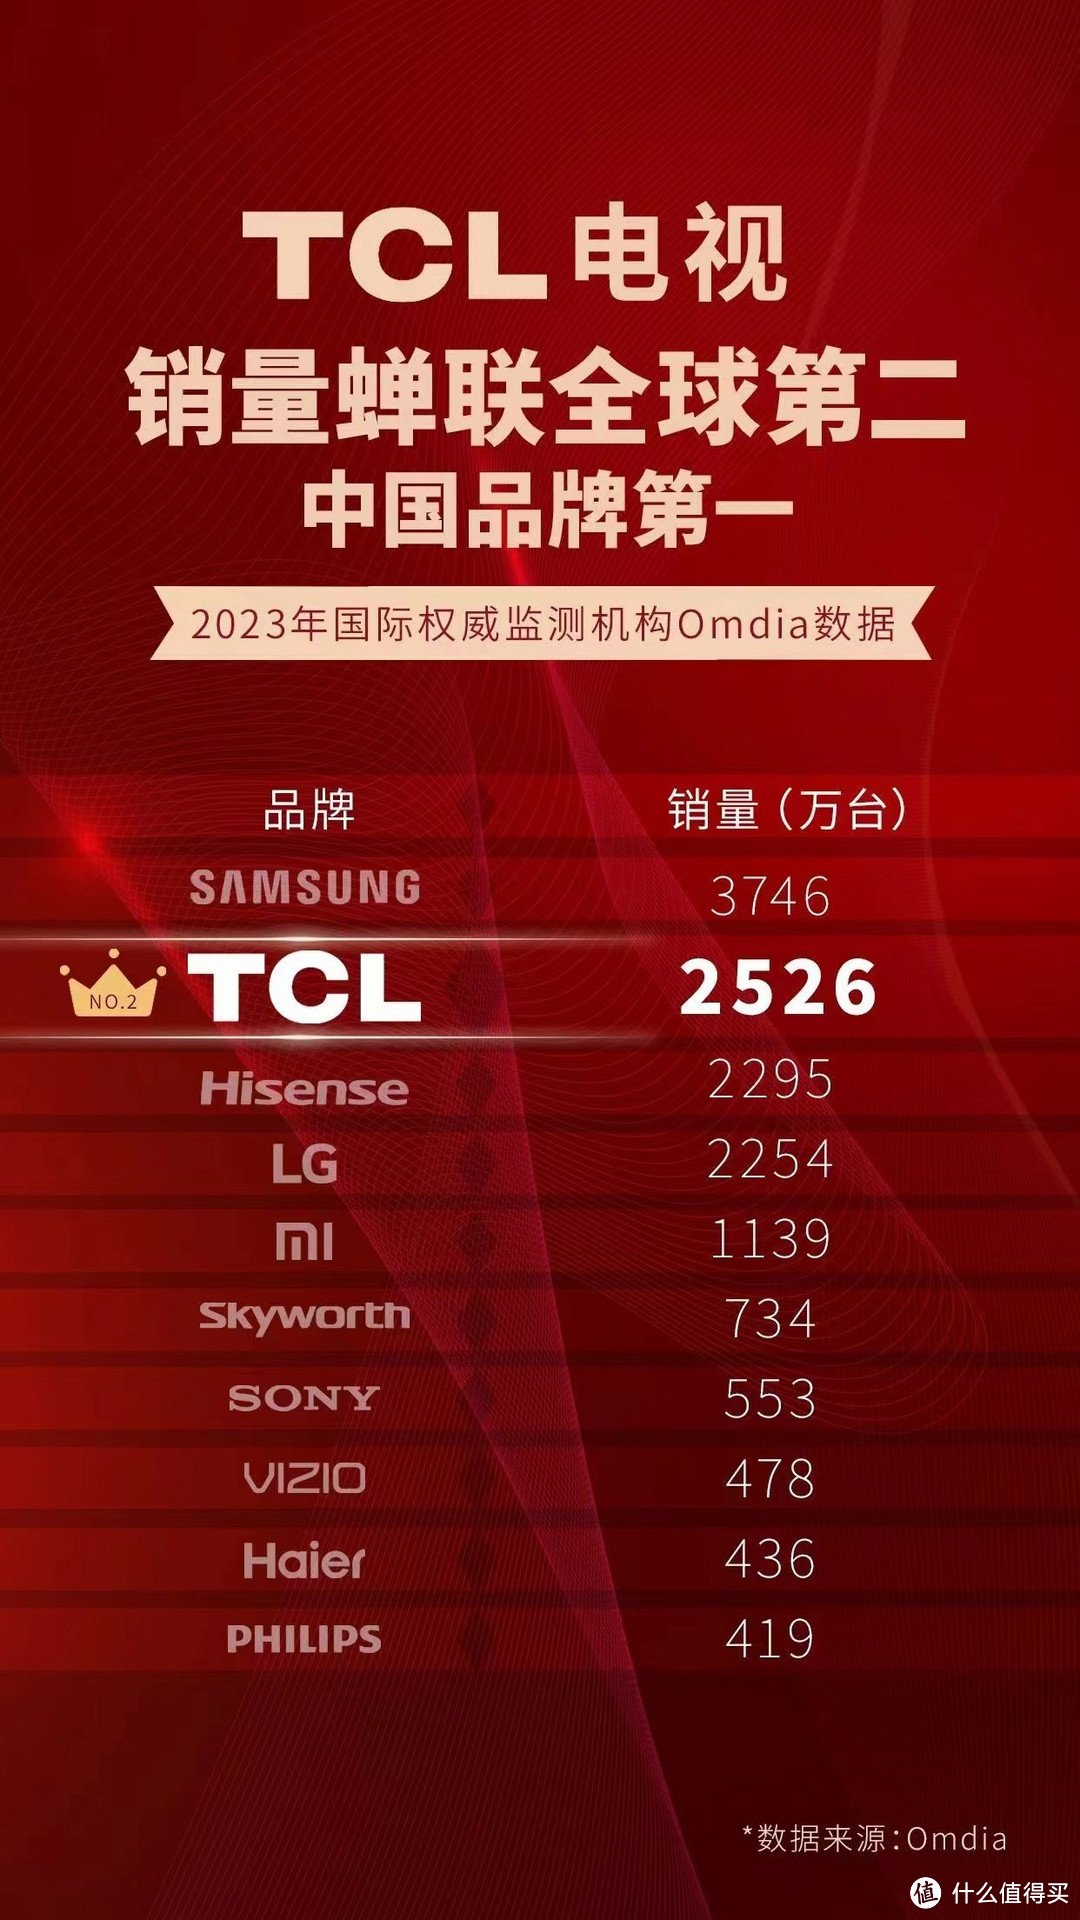 TCL电视再创辉煌！2023年全球销量第二，中国品牌第一！国人骄傲！